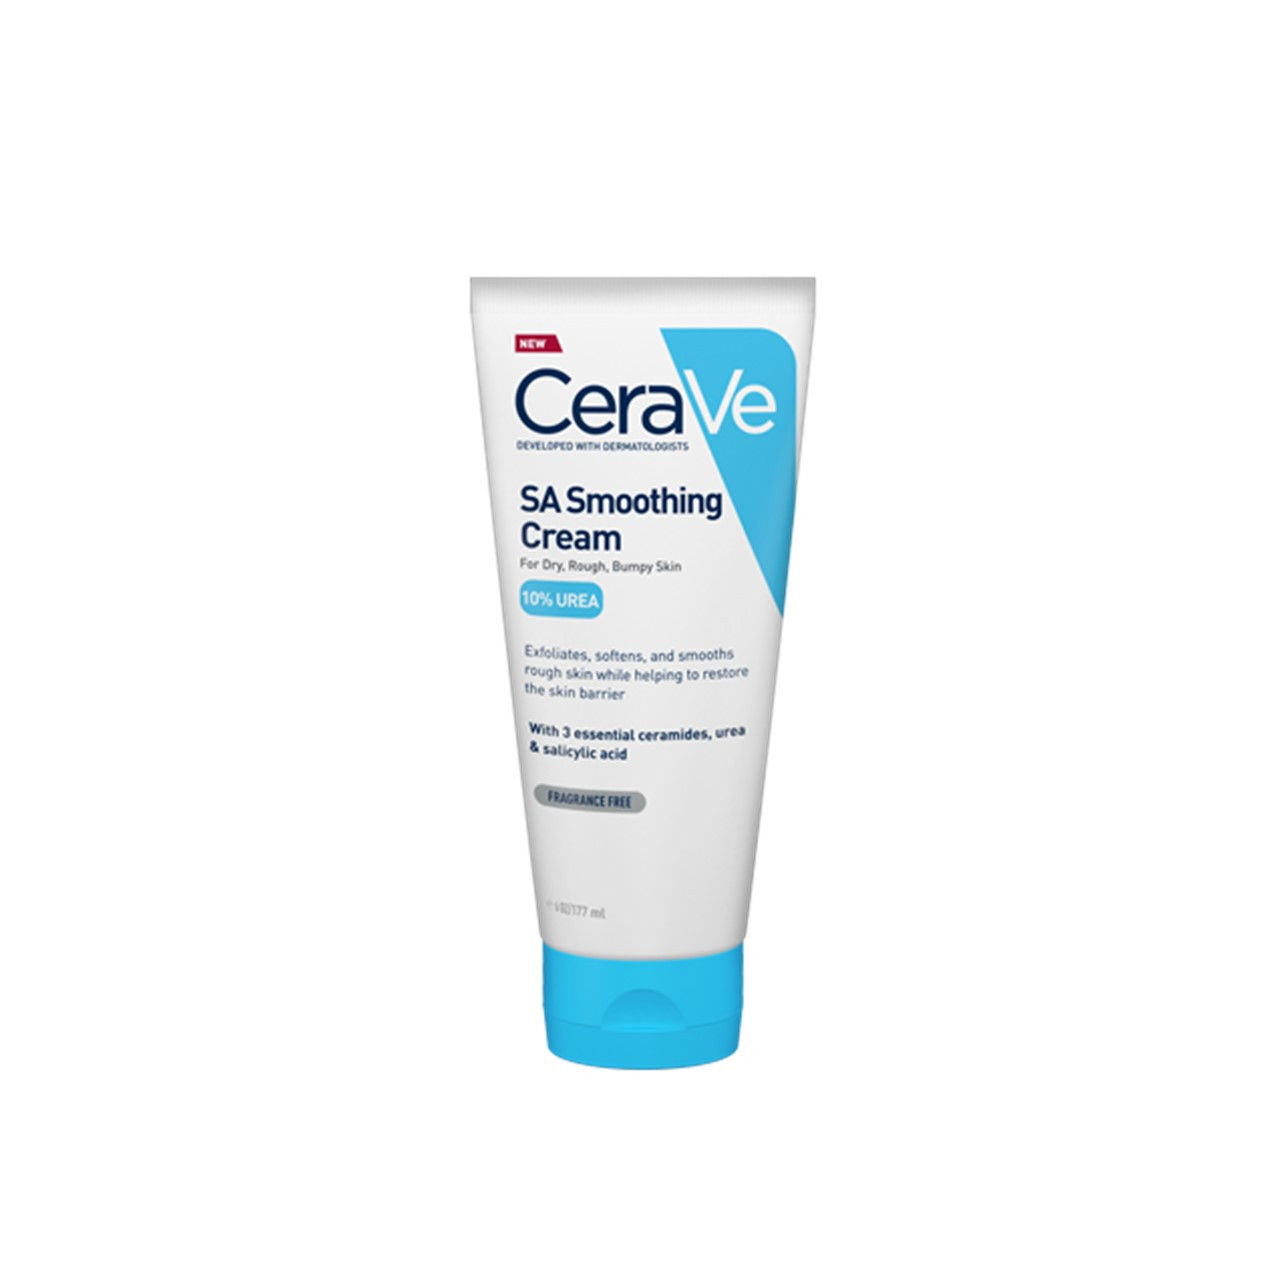 CeraVe SA Smoothing Cream For Dry, Rough, Bumpy Skin 10% Urea 170g (6.00oz)